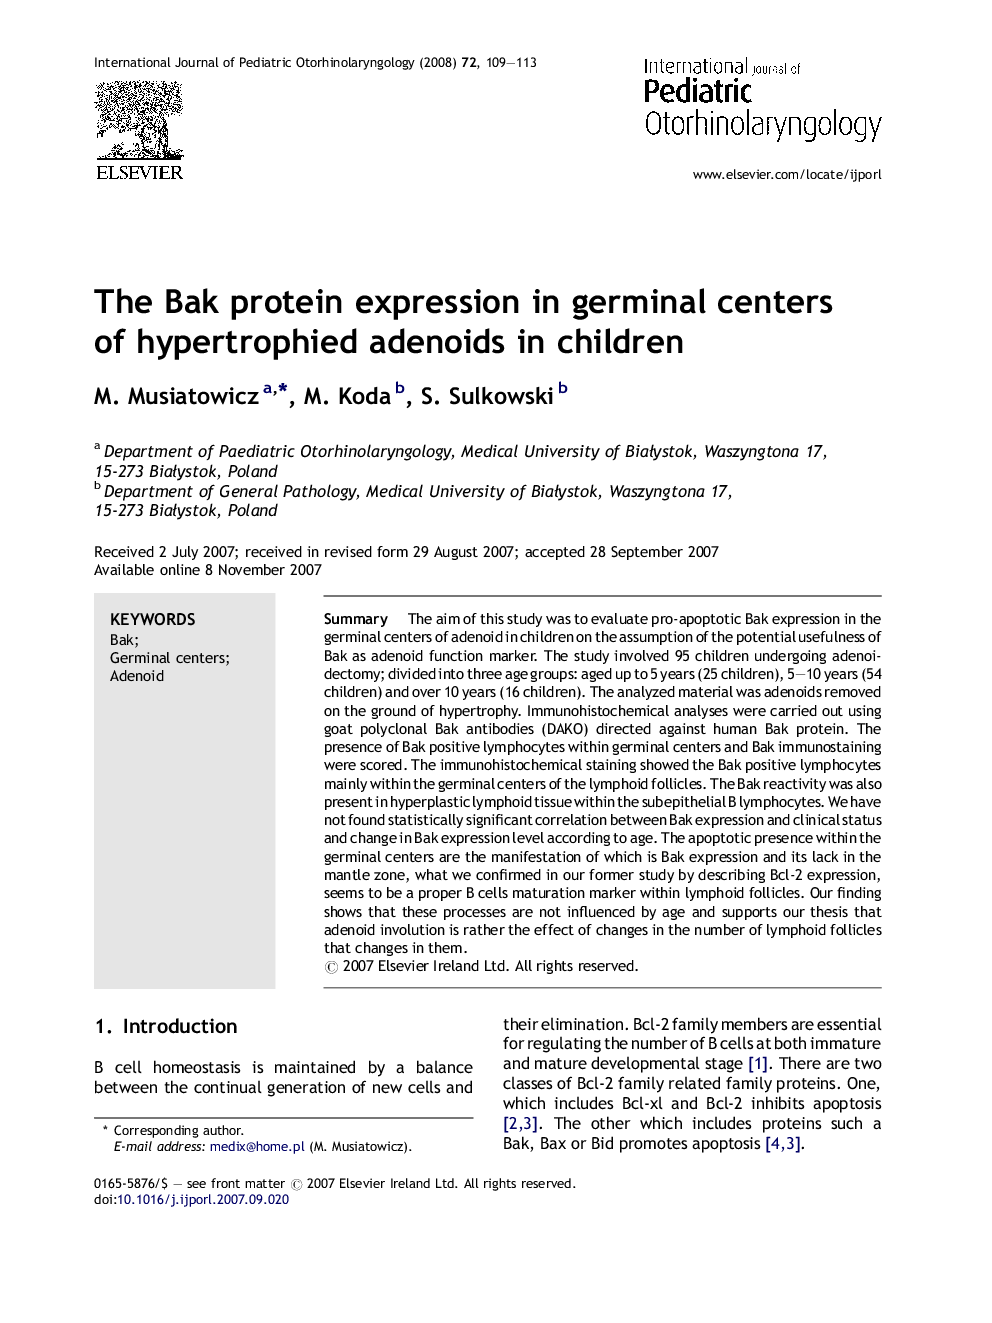 The Bak protein expression in germinal centers of hypertrophied adenoids in children